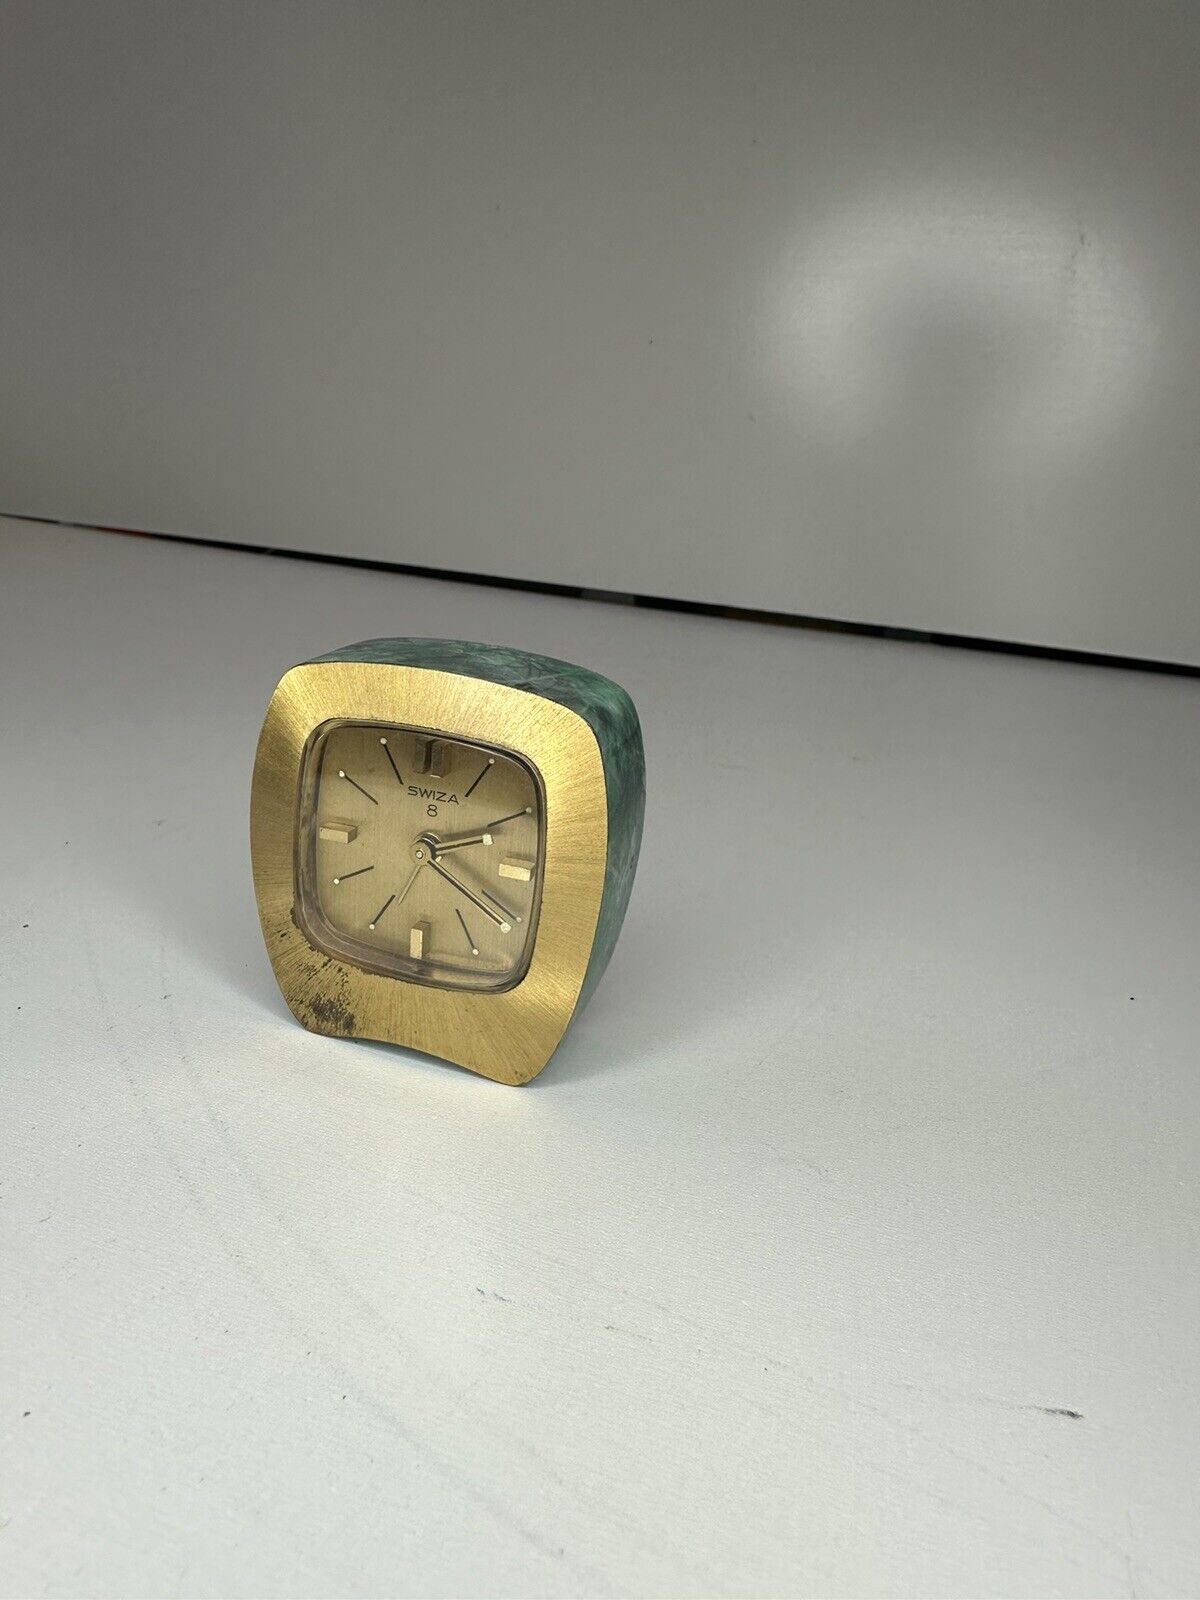 LOOK - Swiza 8-Day Brass Wind Up Alarm Clock